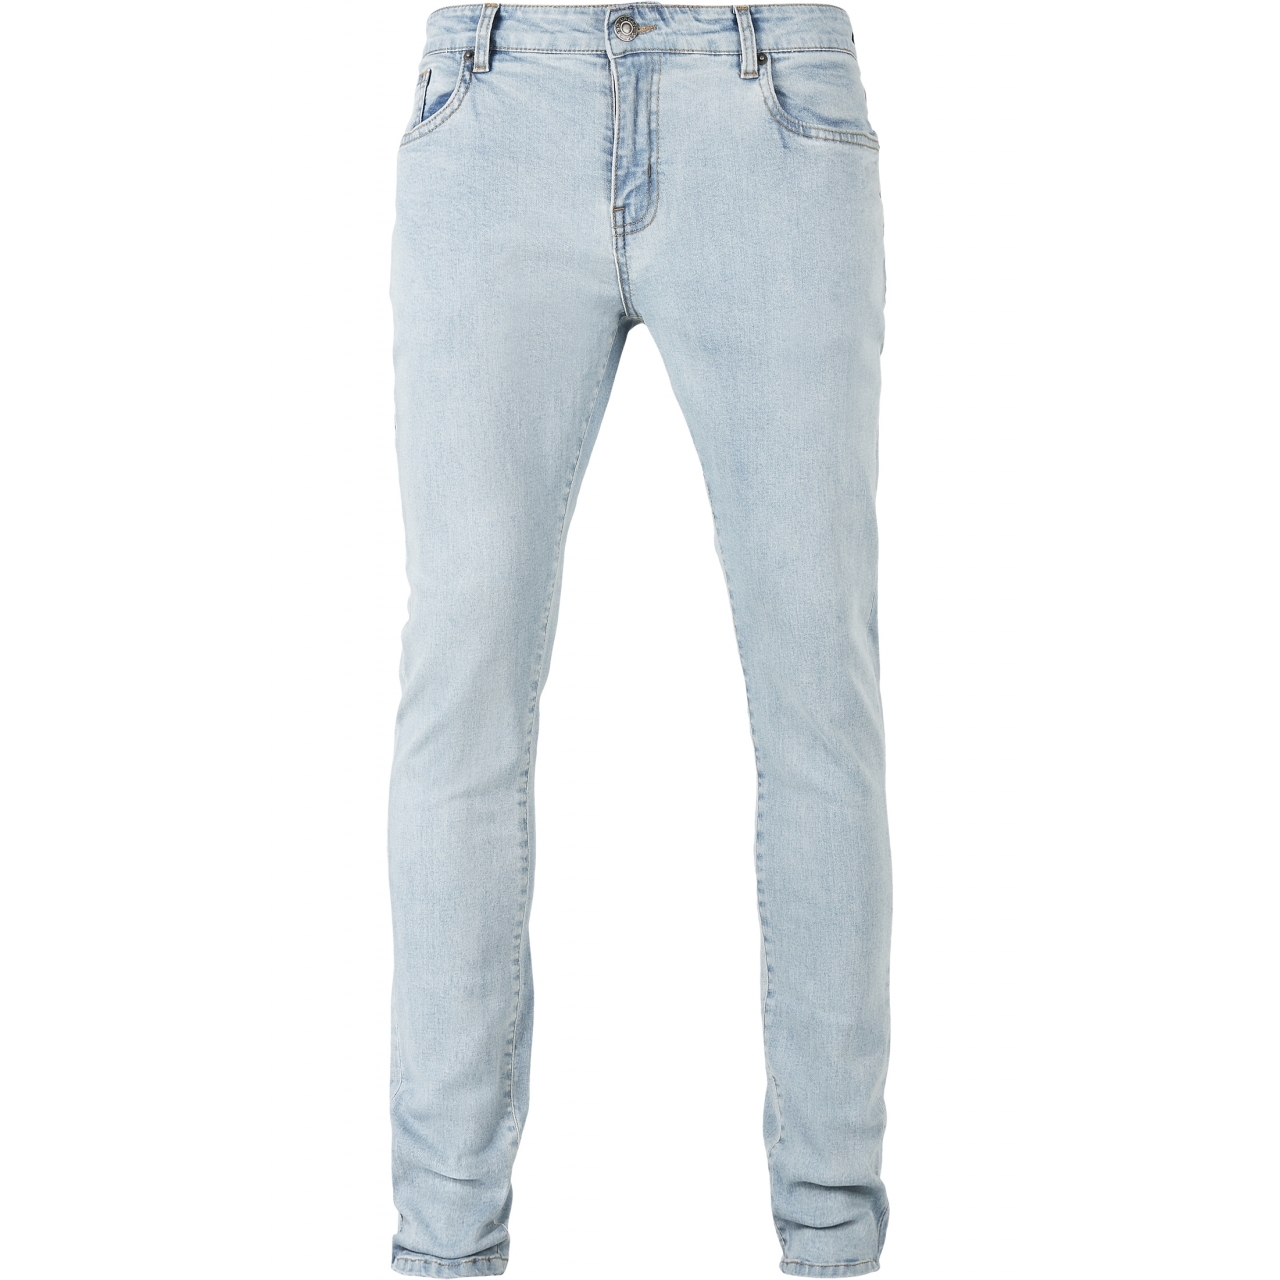 Džíny Urban Classics Slim Fit Zip Jeans - modré, 28/32